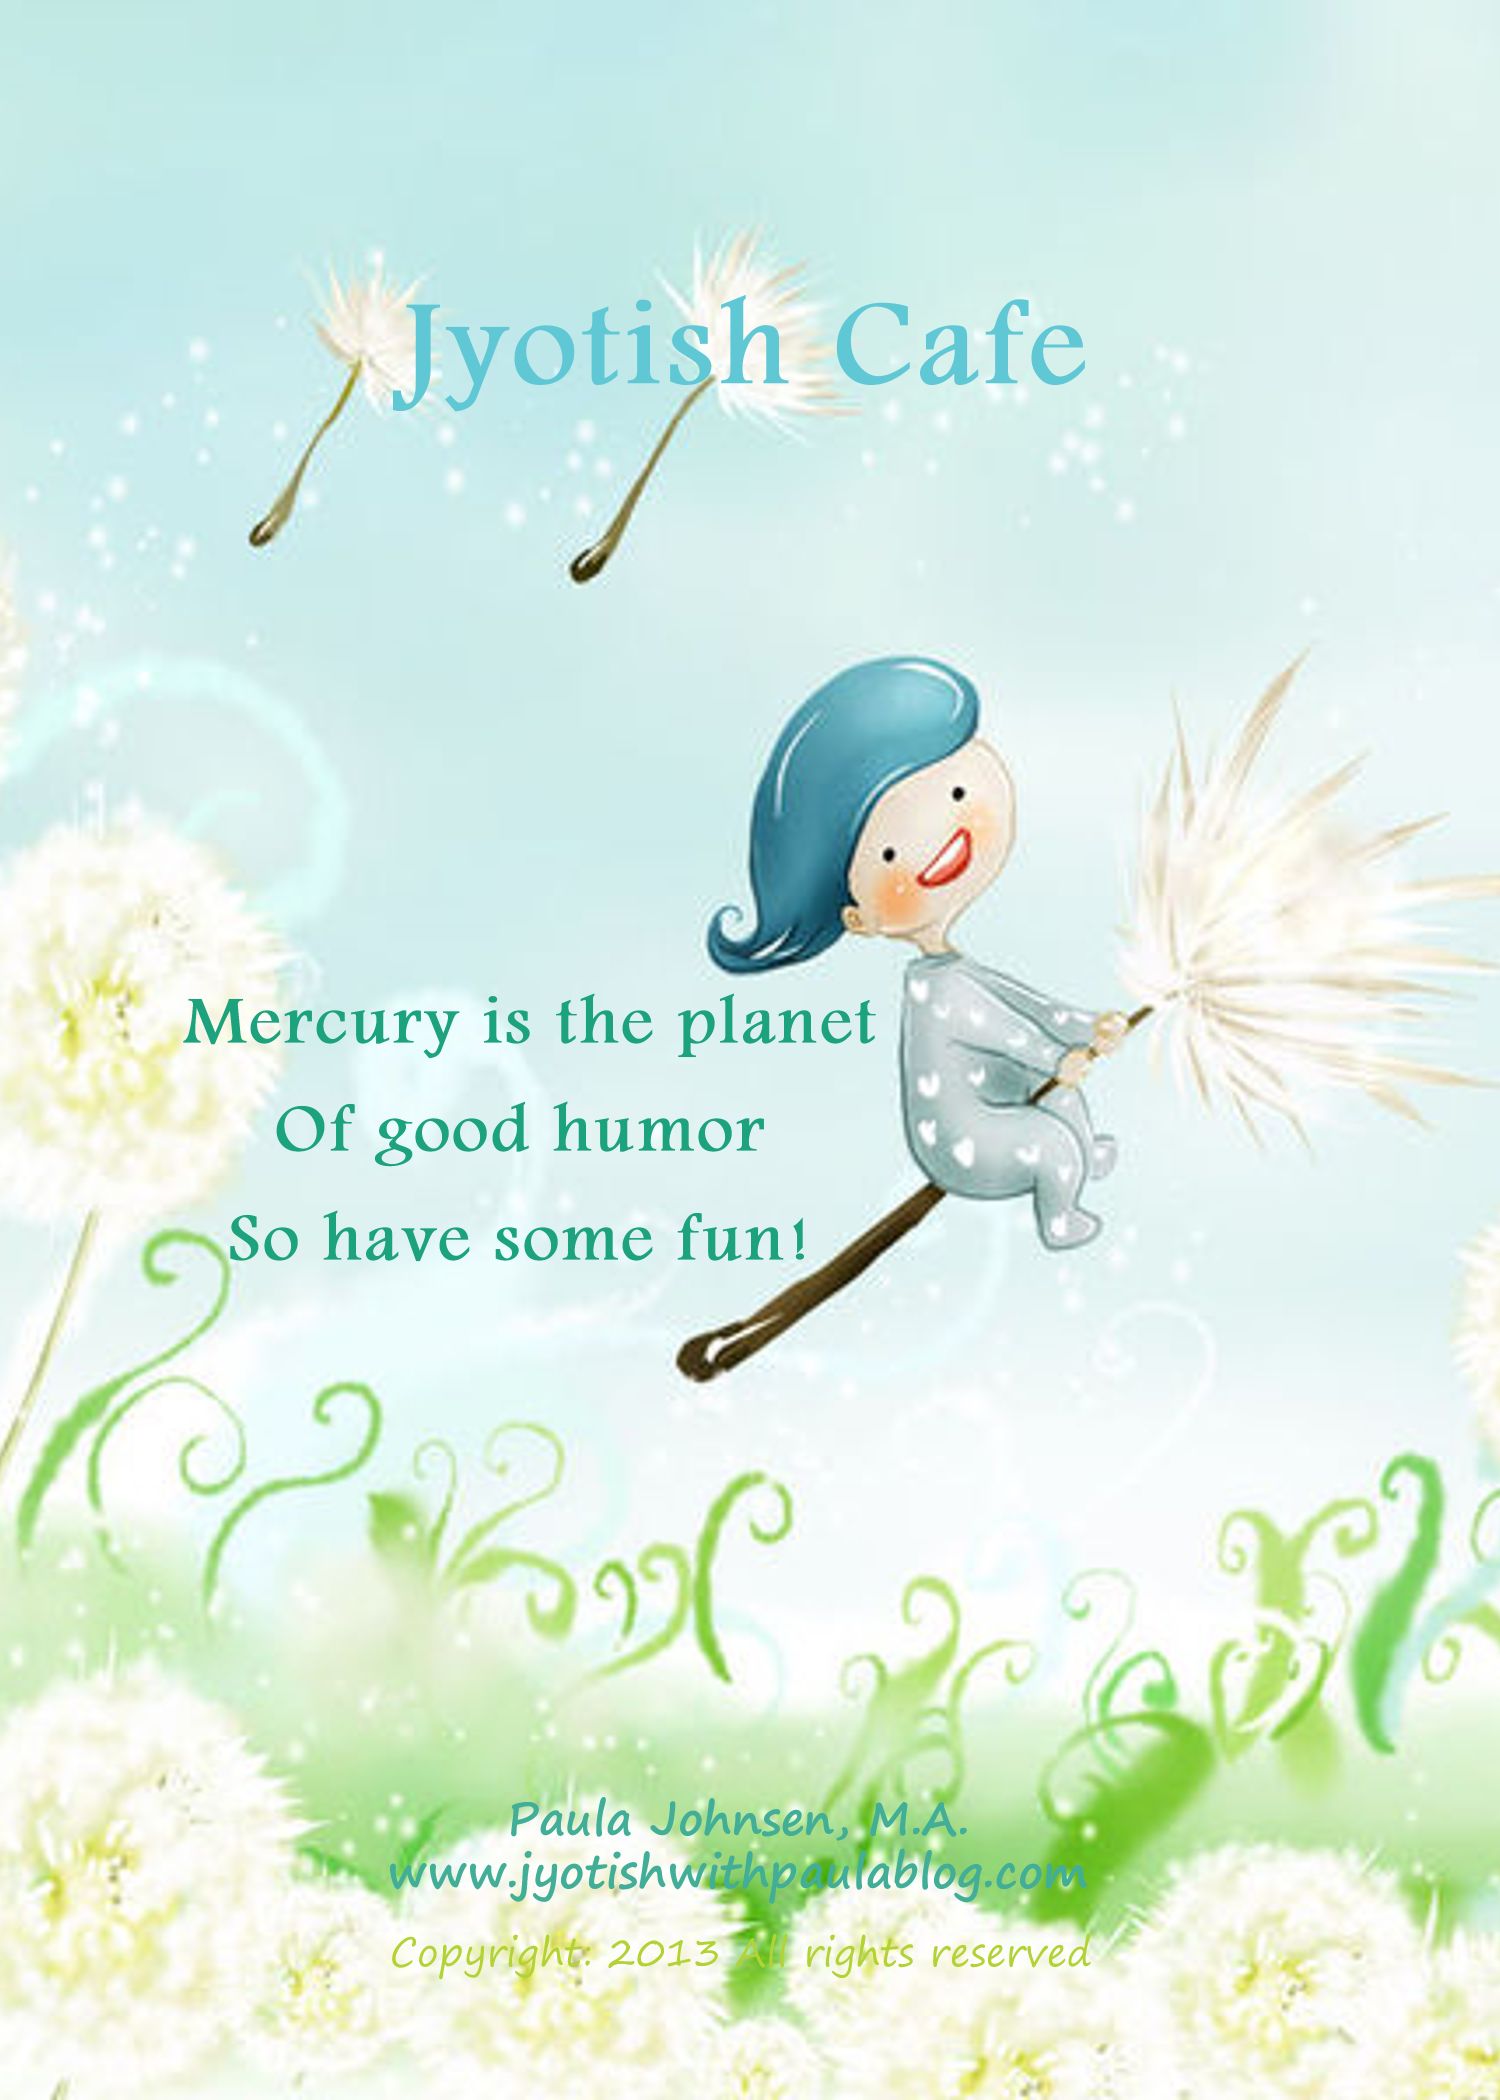 Sample from Jyotish Cafe - go to Jyotish Cafe